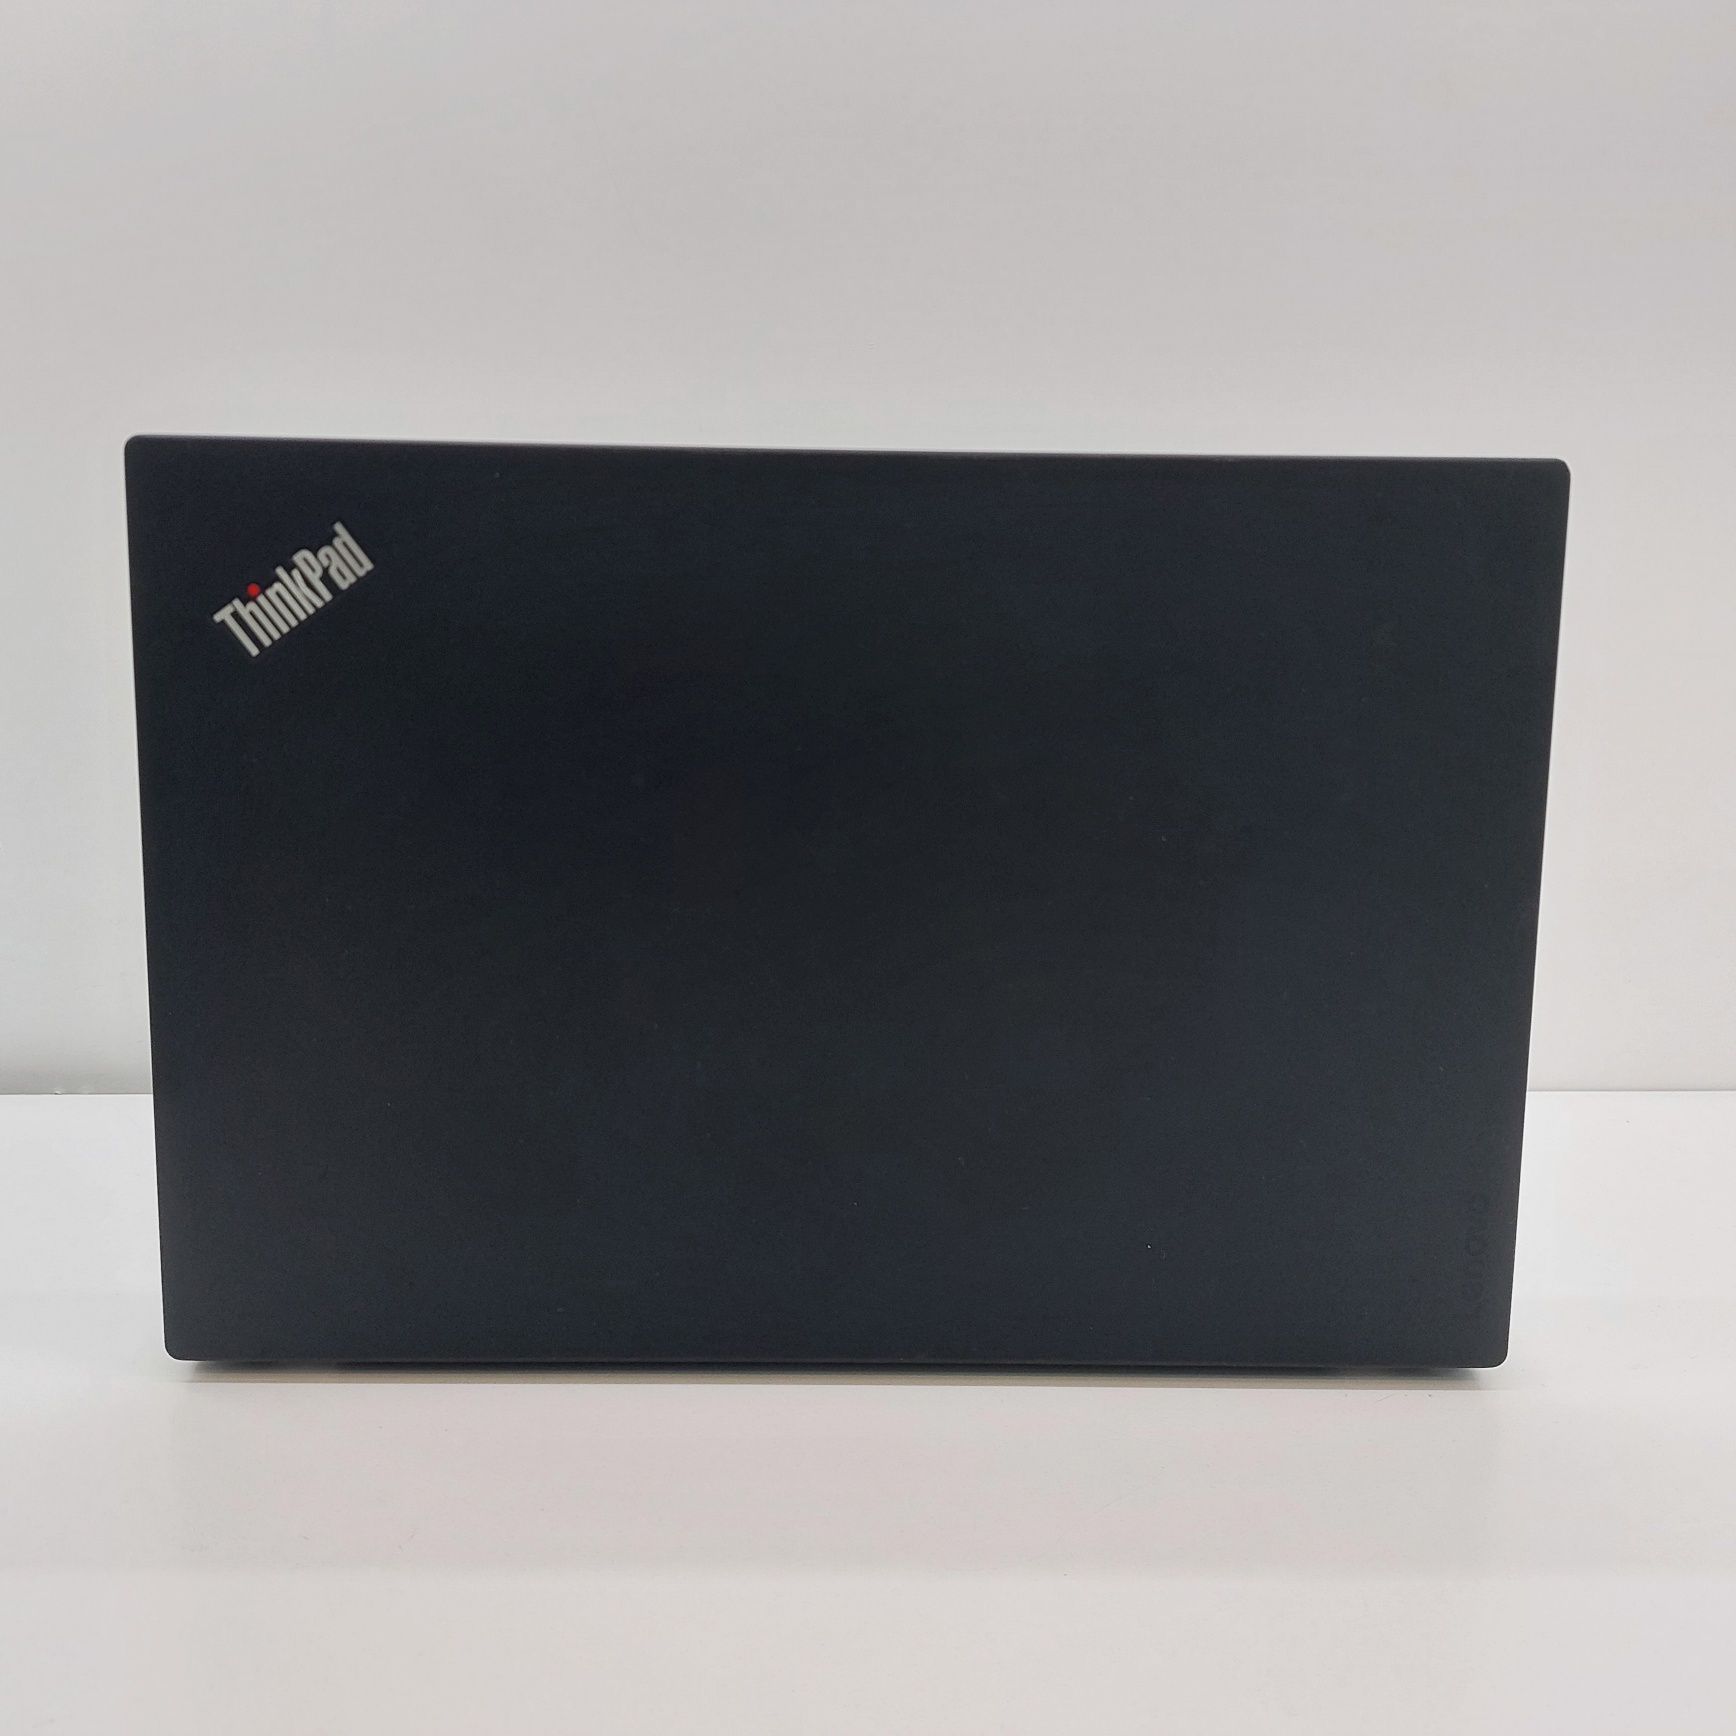 Lenovo ThinkPad X1 Carbon 14.1 FHD IPS/ i7-7500U/16 RAM/ 512 SSD бу